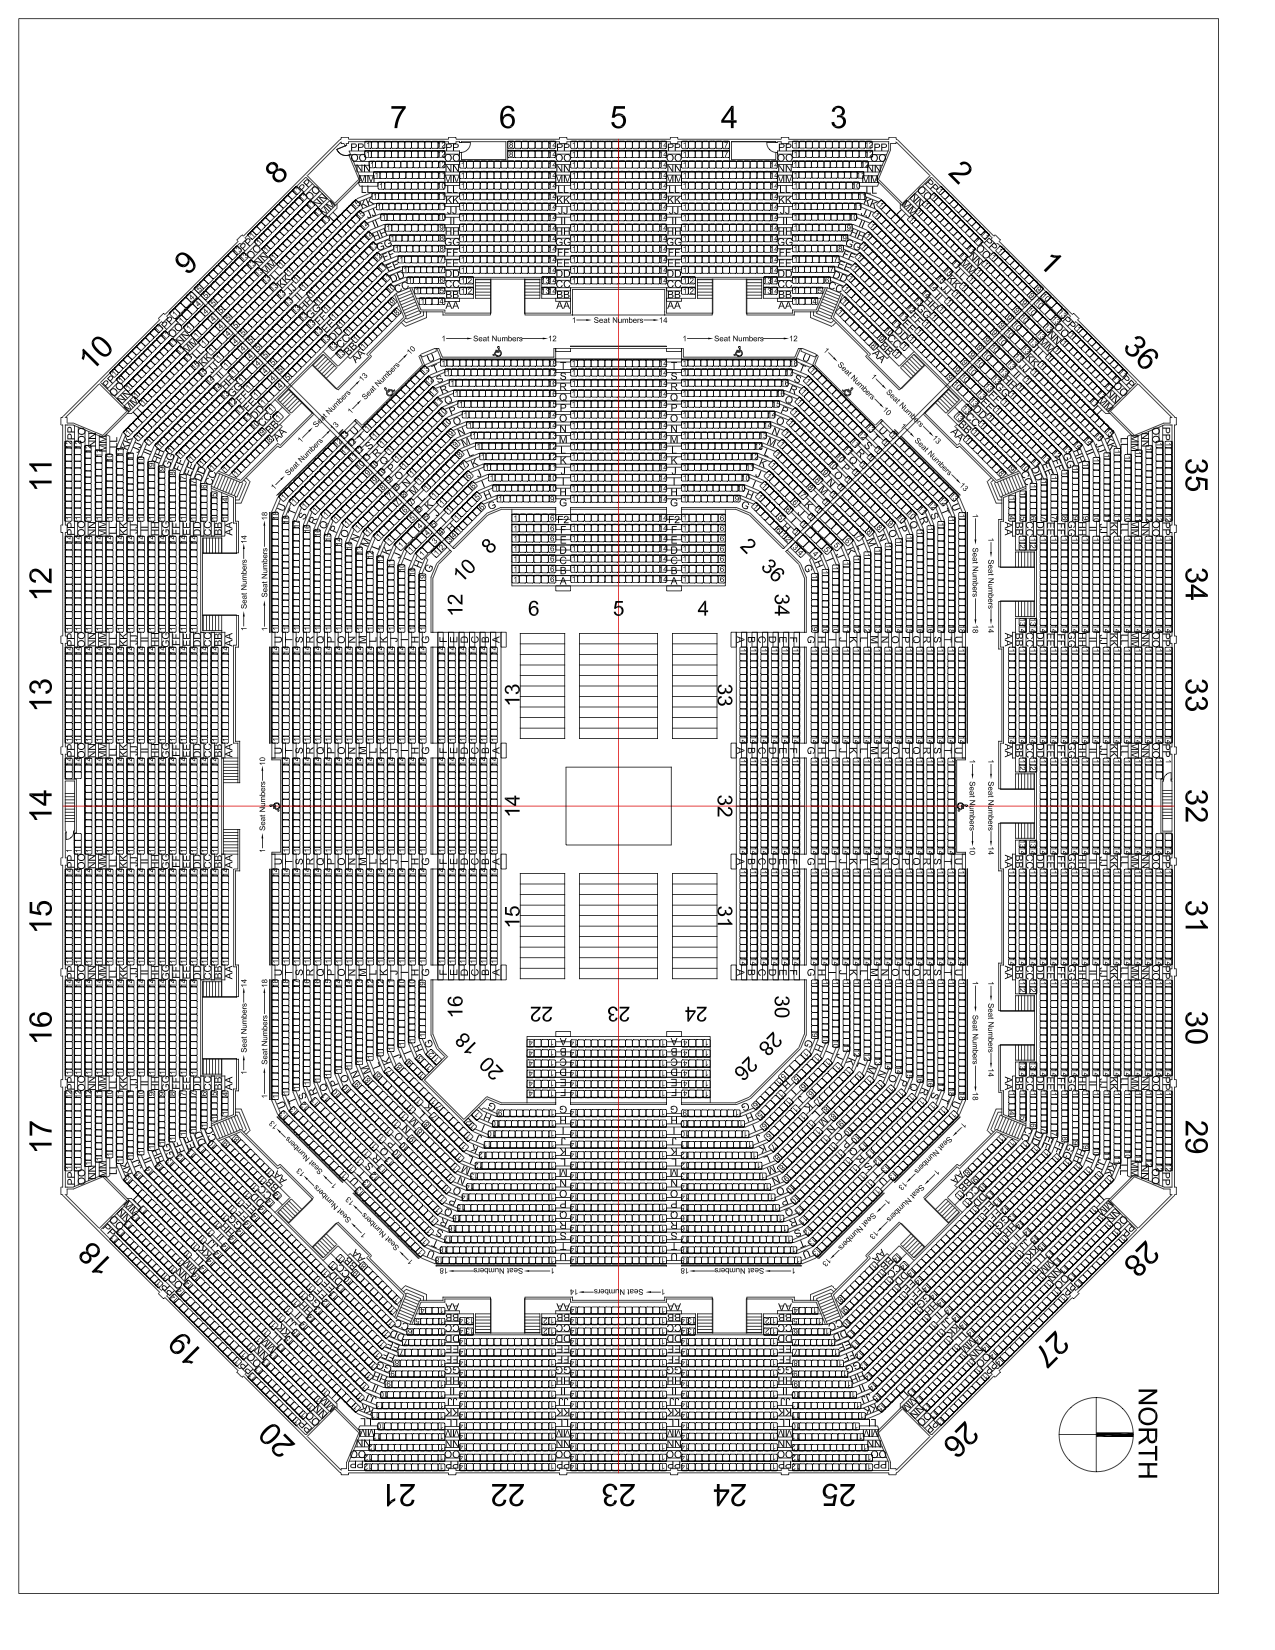 Where are you seated? | Beasley Coliseum | Washington State ...